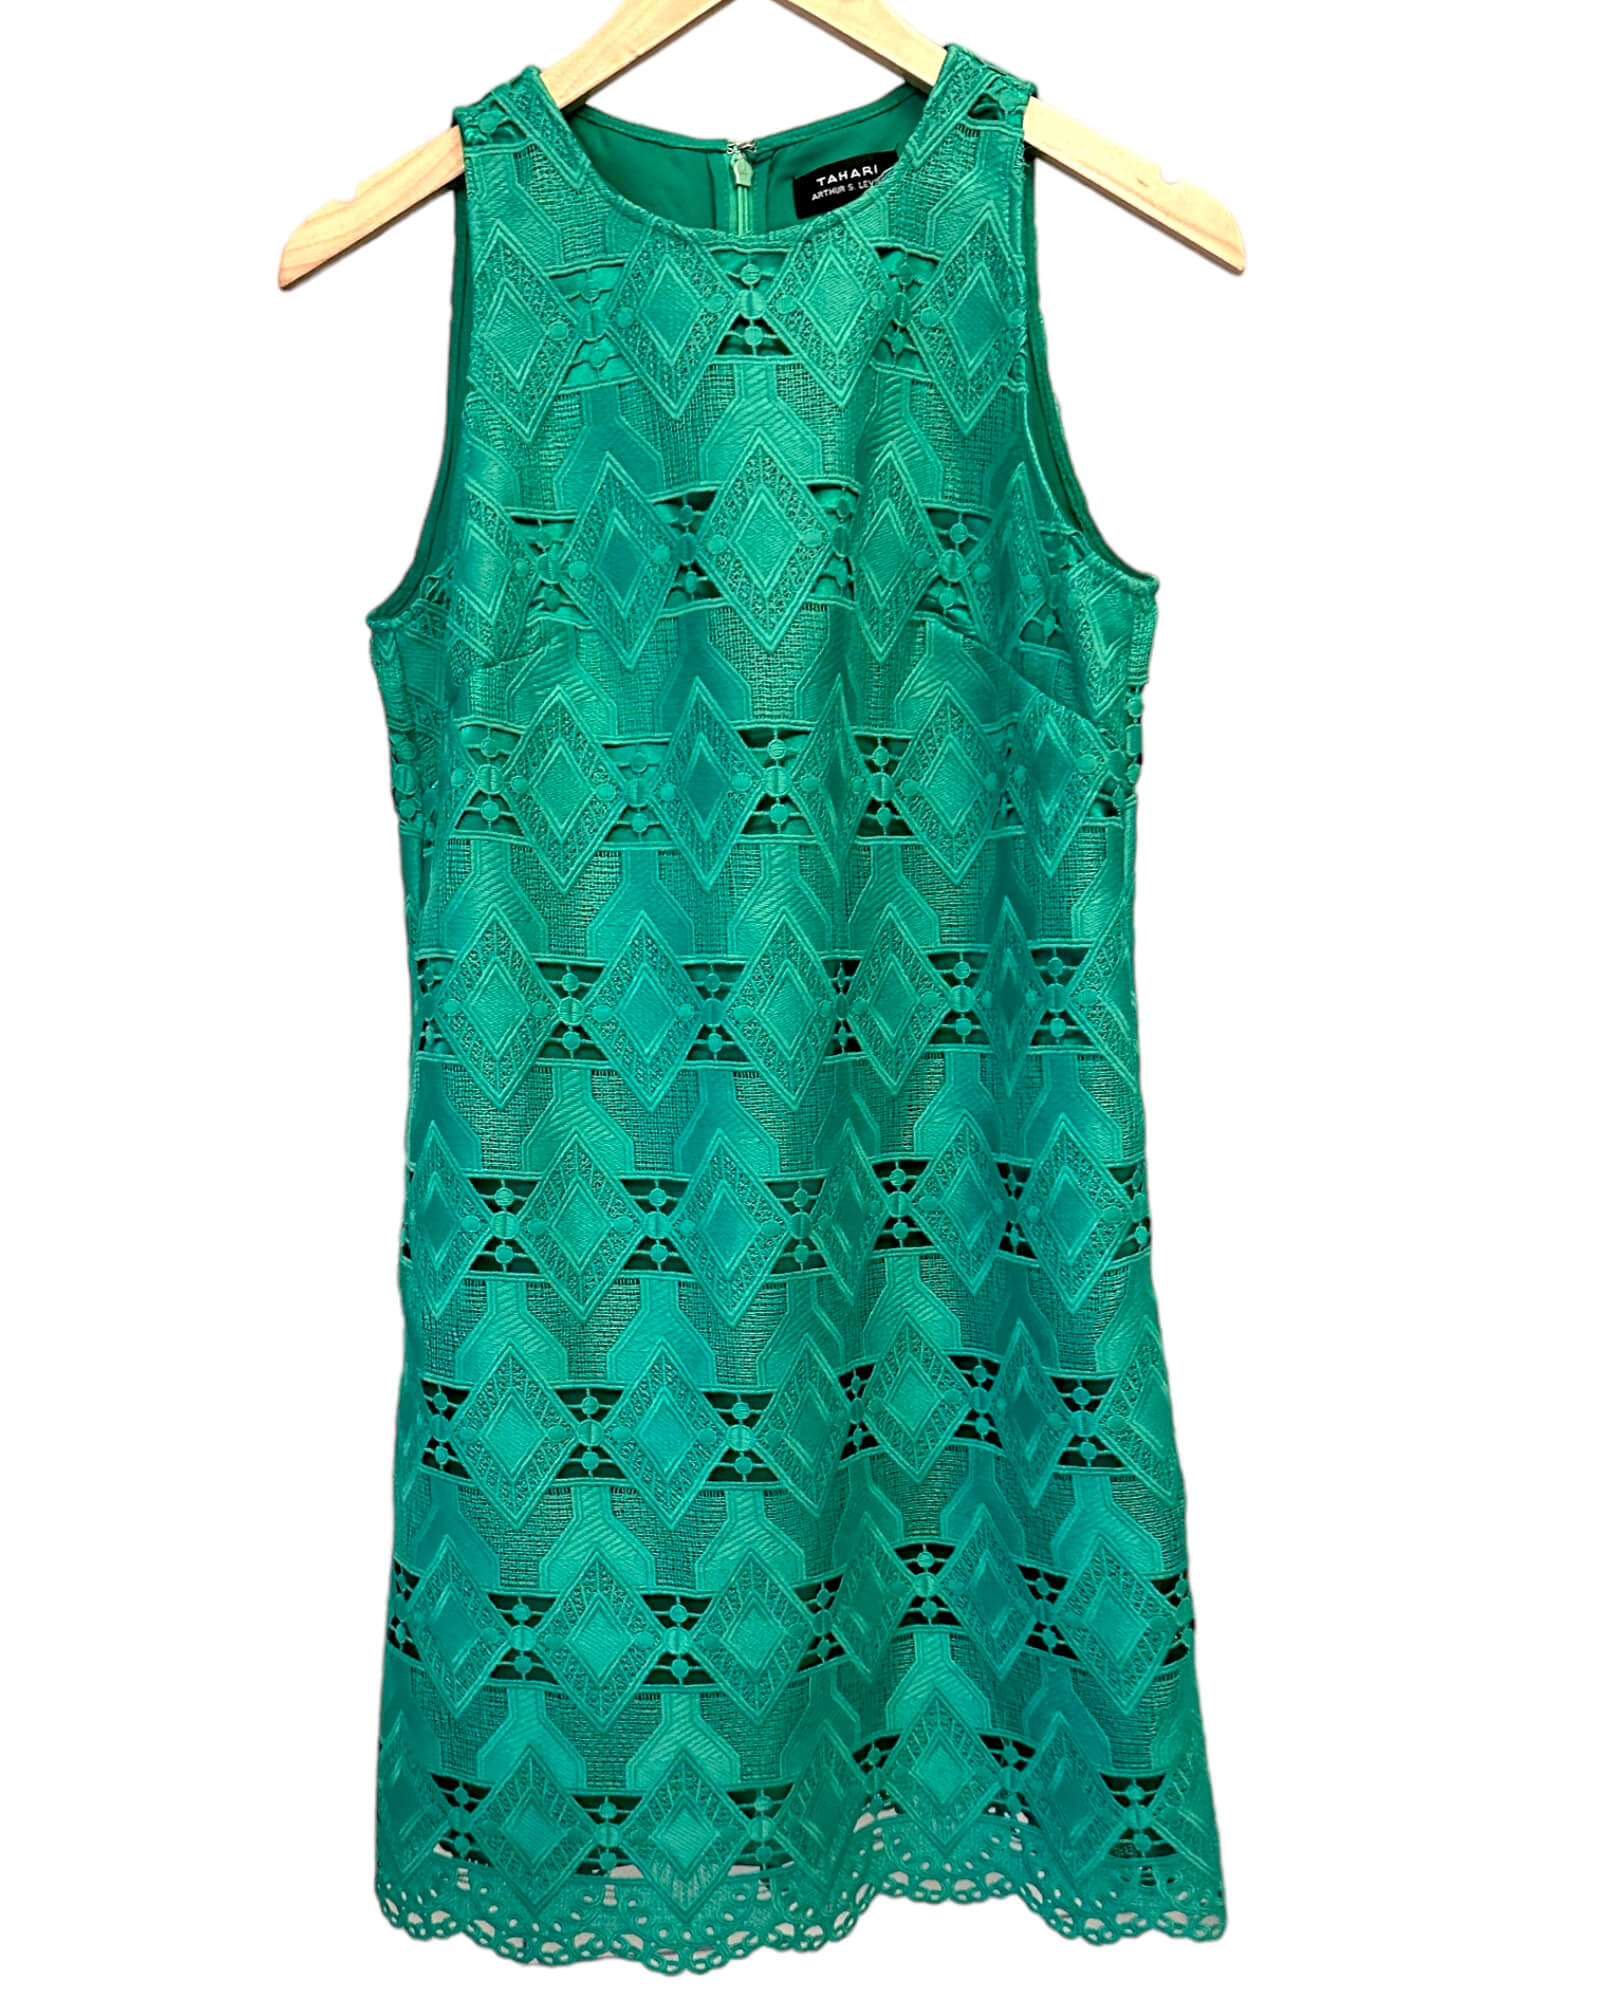 Light Spring TAHARI kelly green geometric lace sheath dress